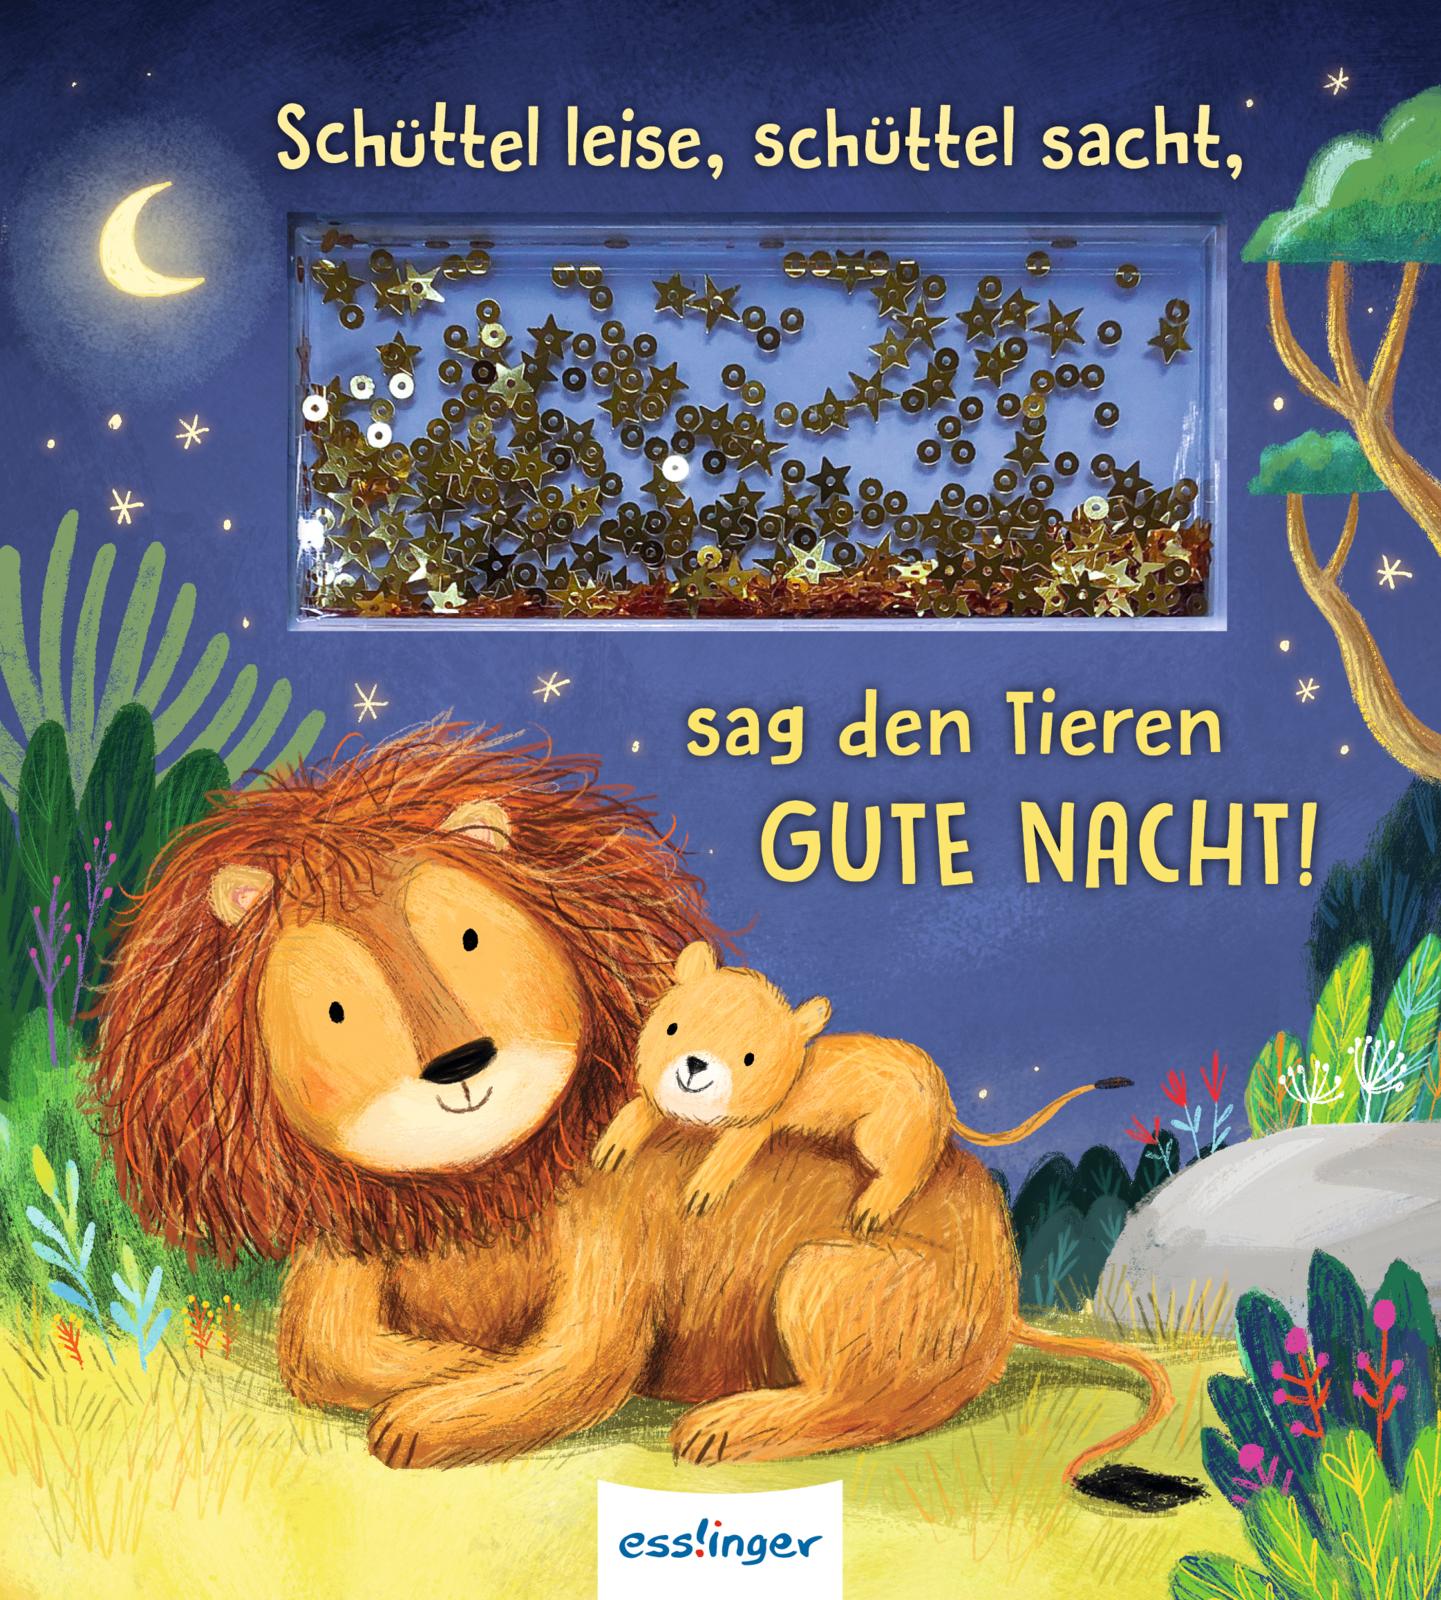 Buchcover "Schüttel leise, schüttel sacht", Esslinger 